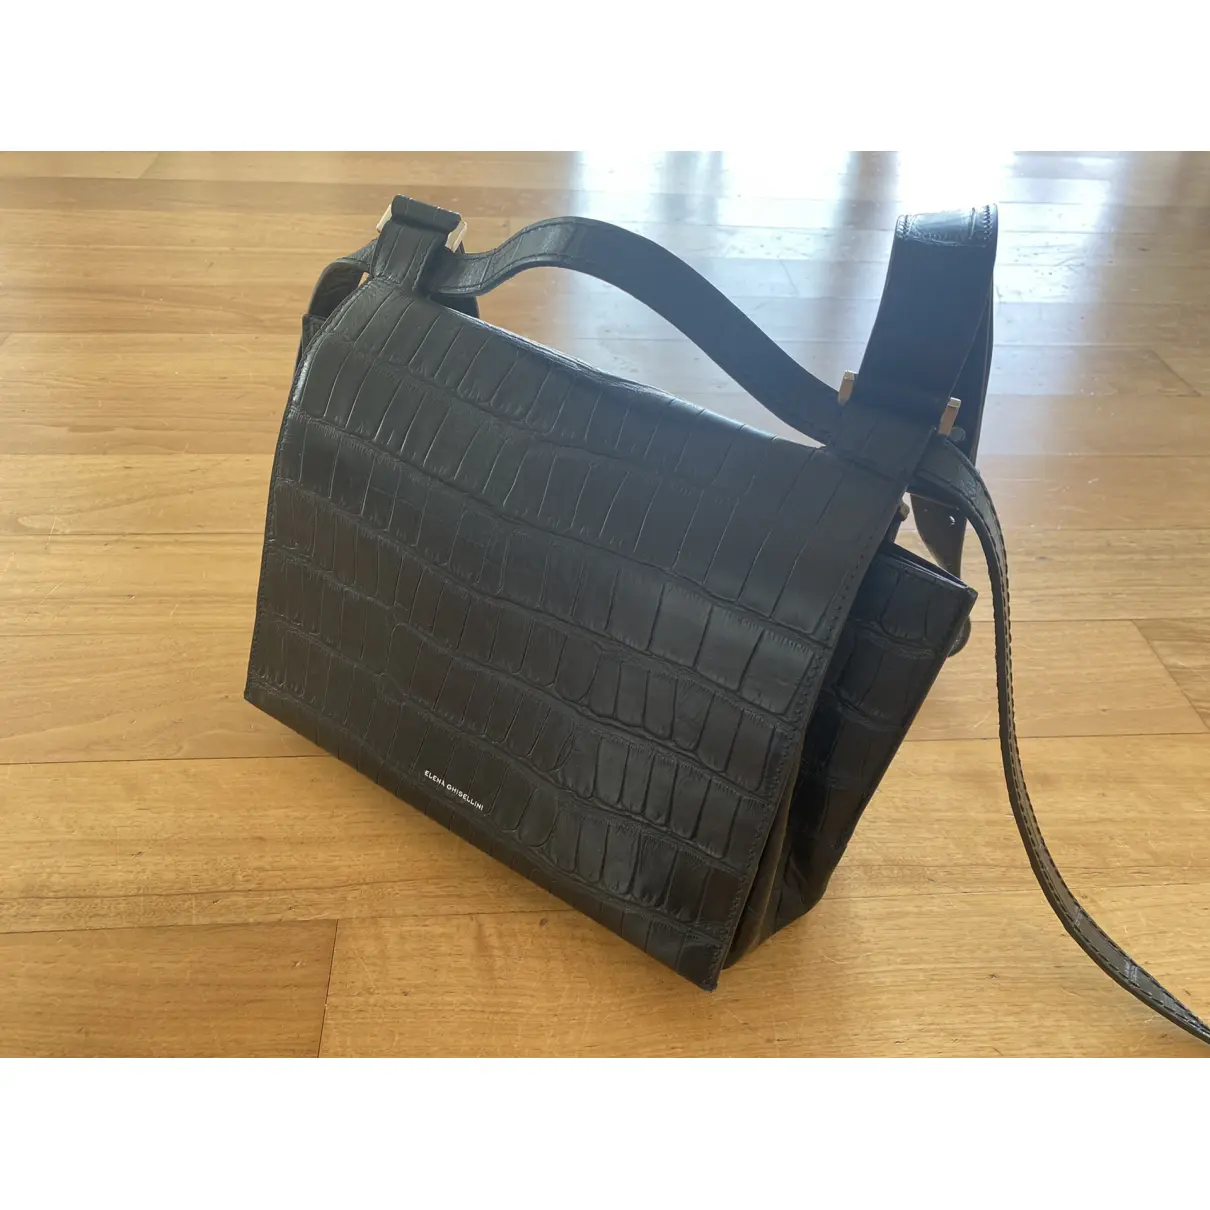 Buy Elena Ghisellini Leather handbag online